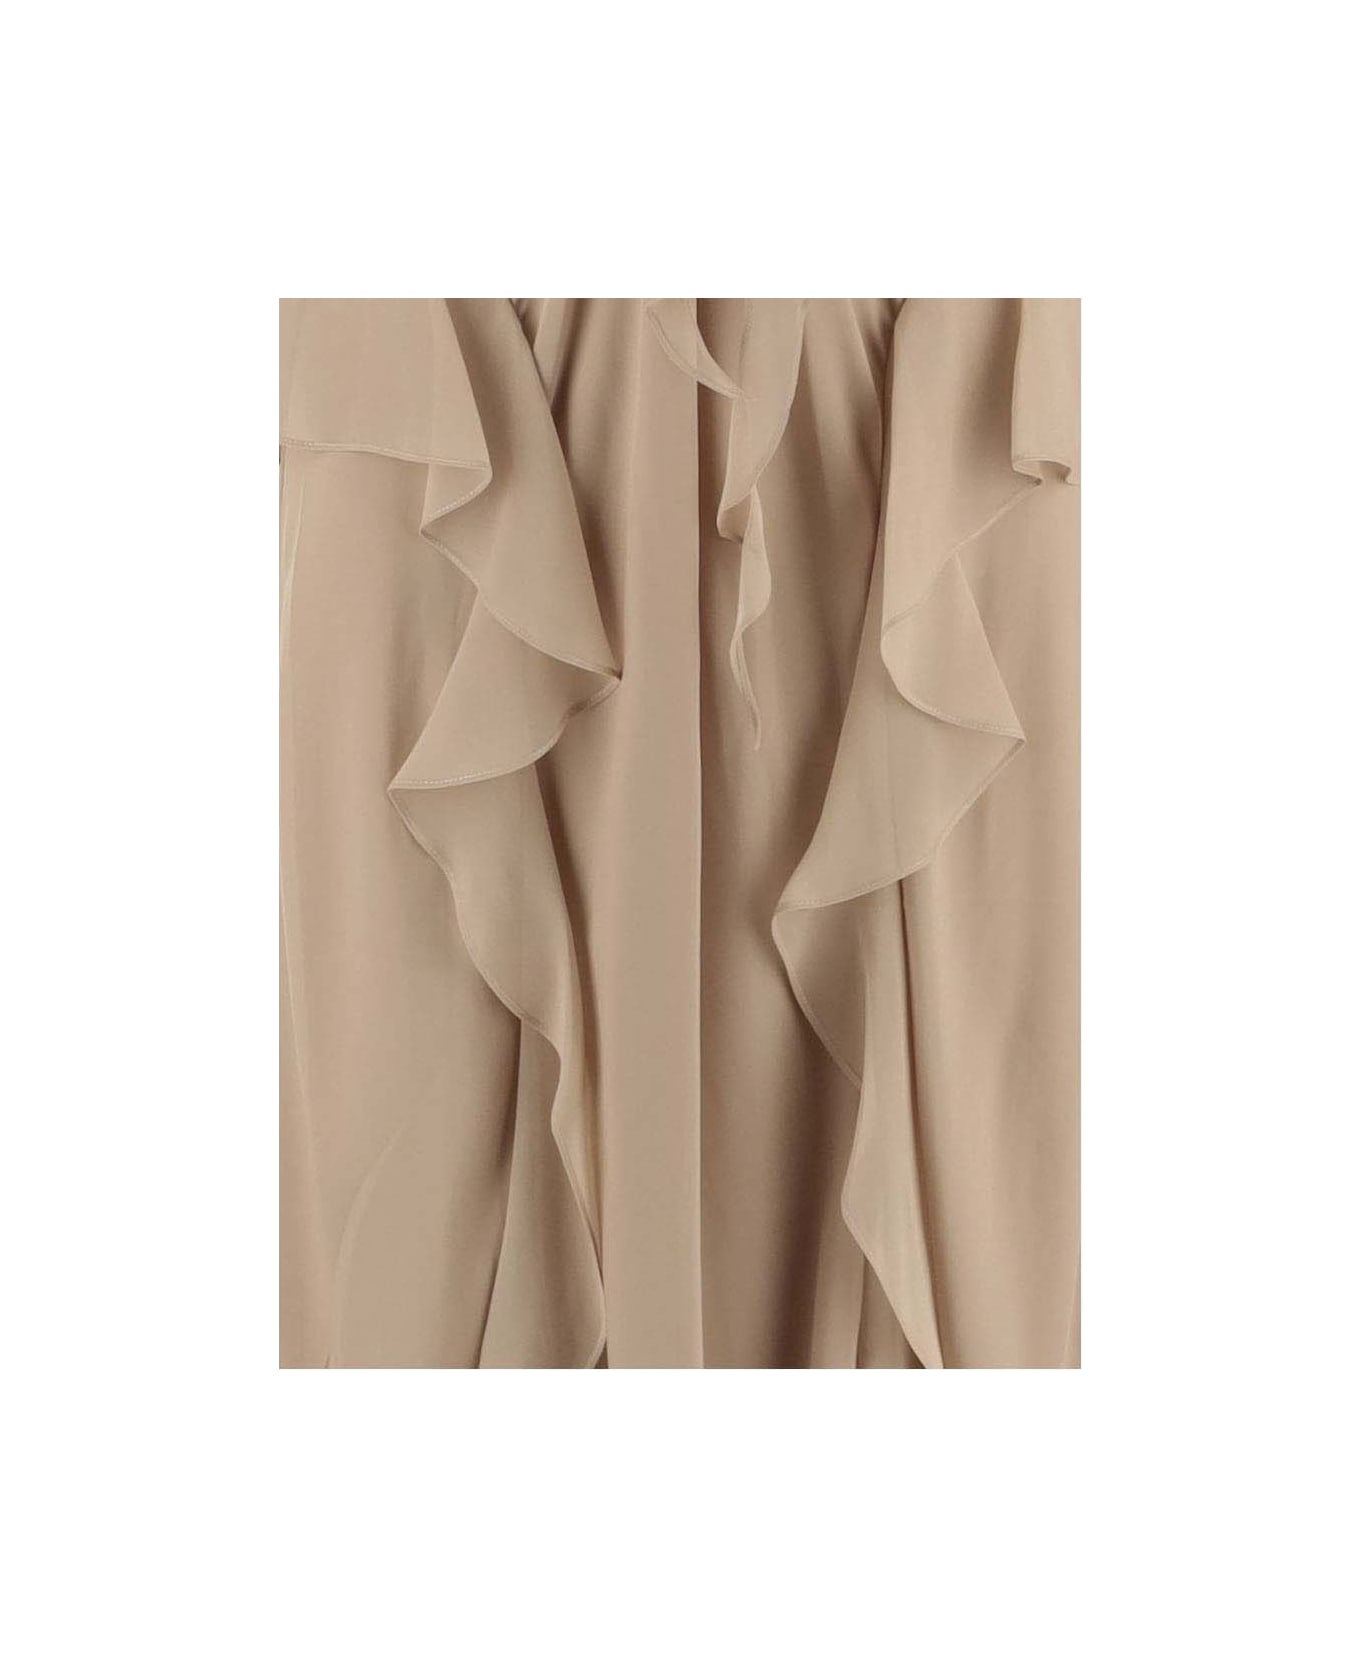 Khaite Silk Midi Dress With Ruffles - Beige